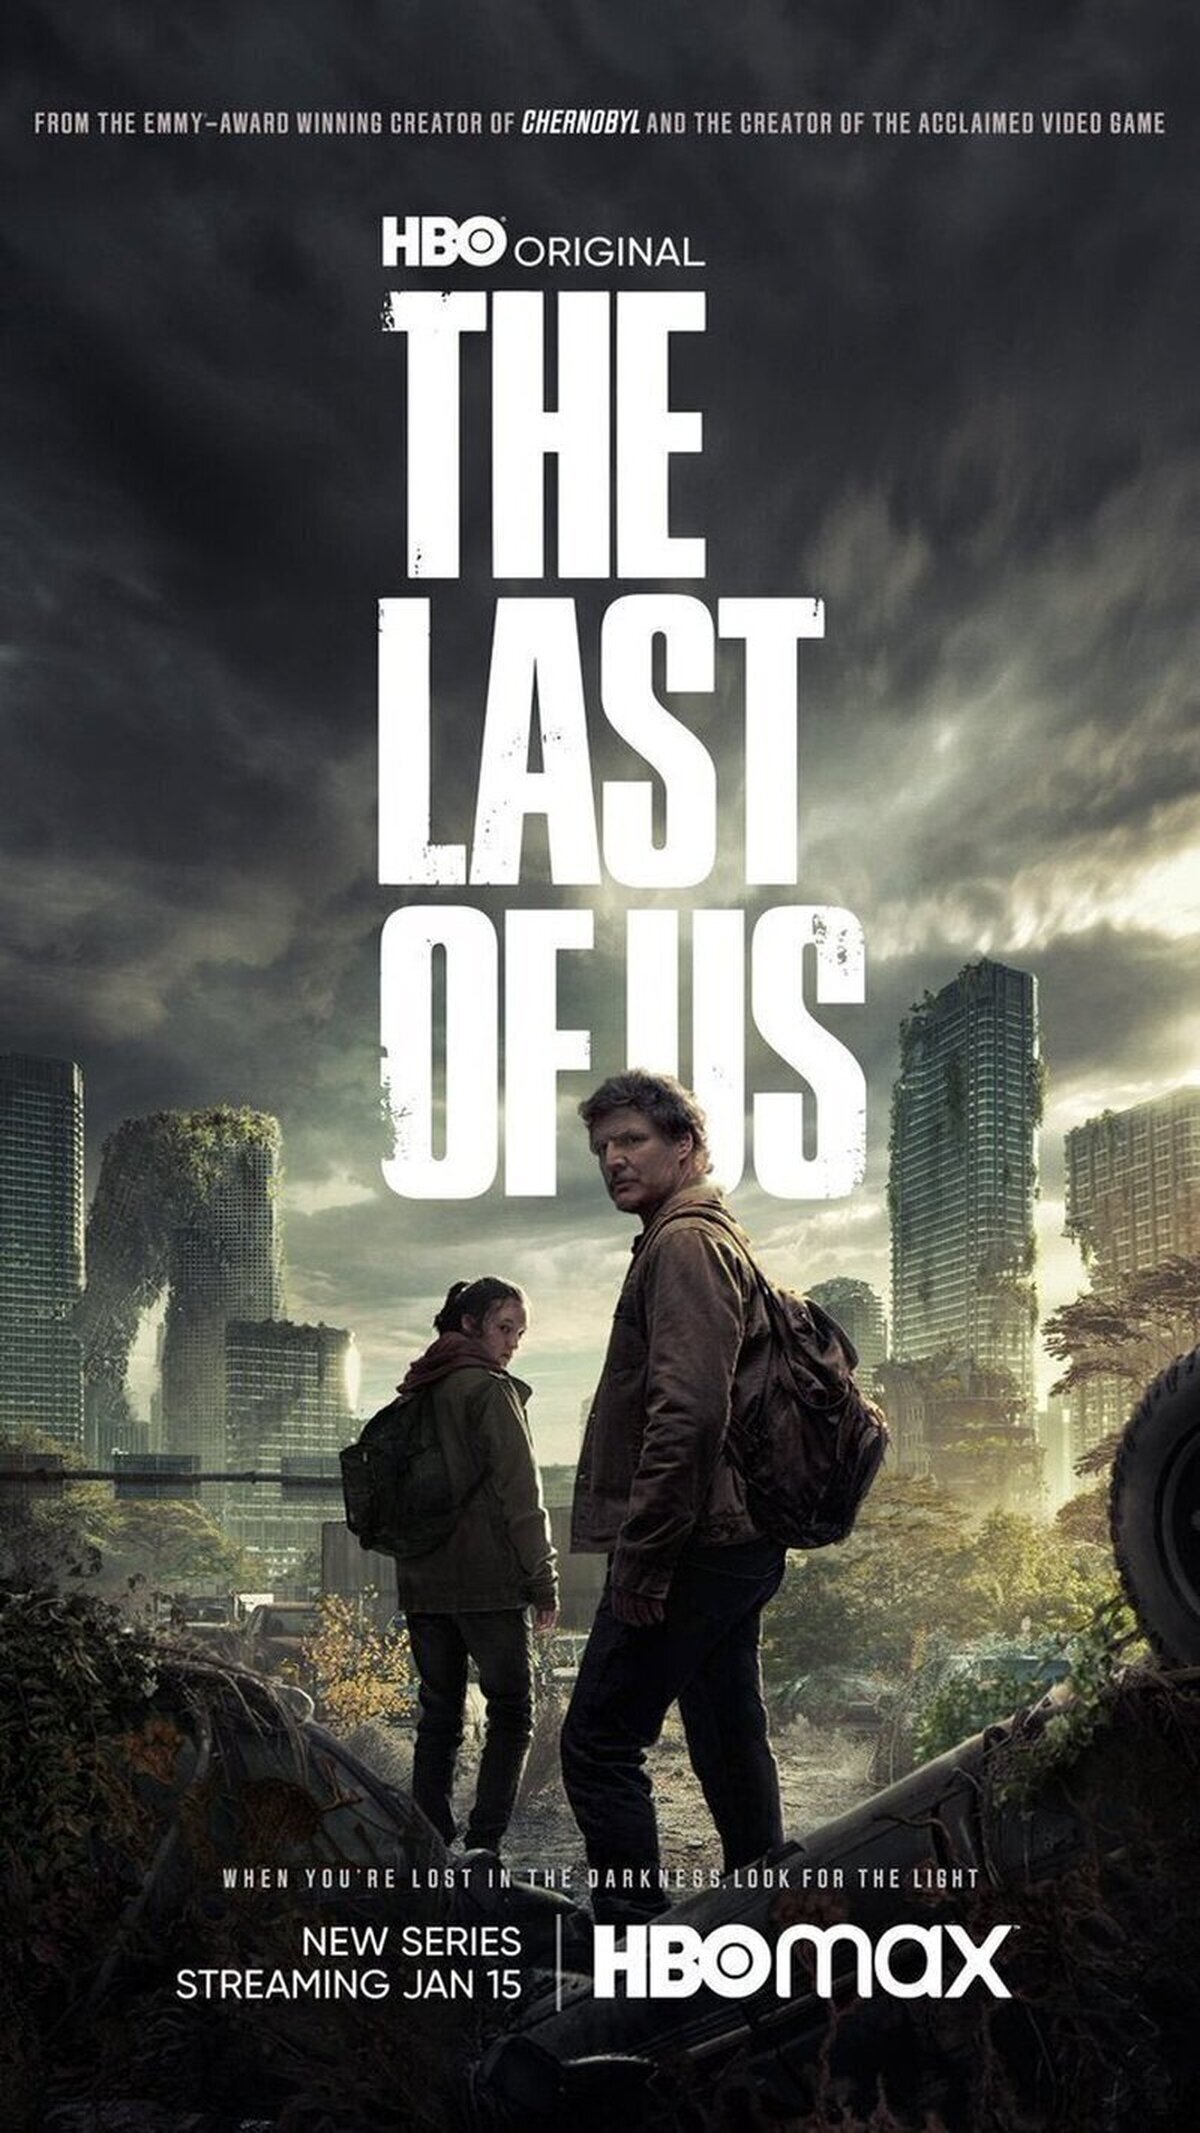  ¡Nuevo póster de 'THE LAST OF US'! 